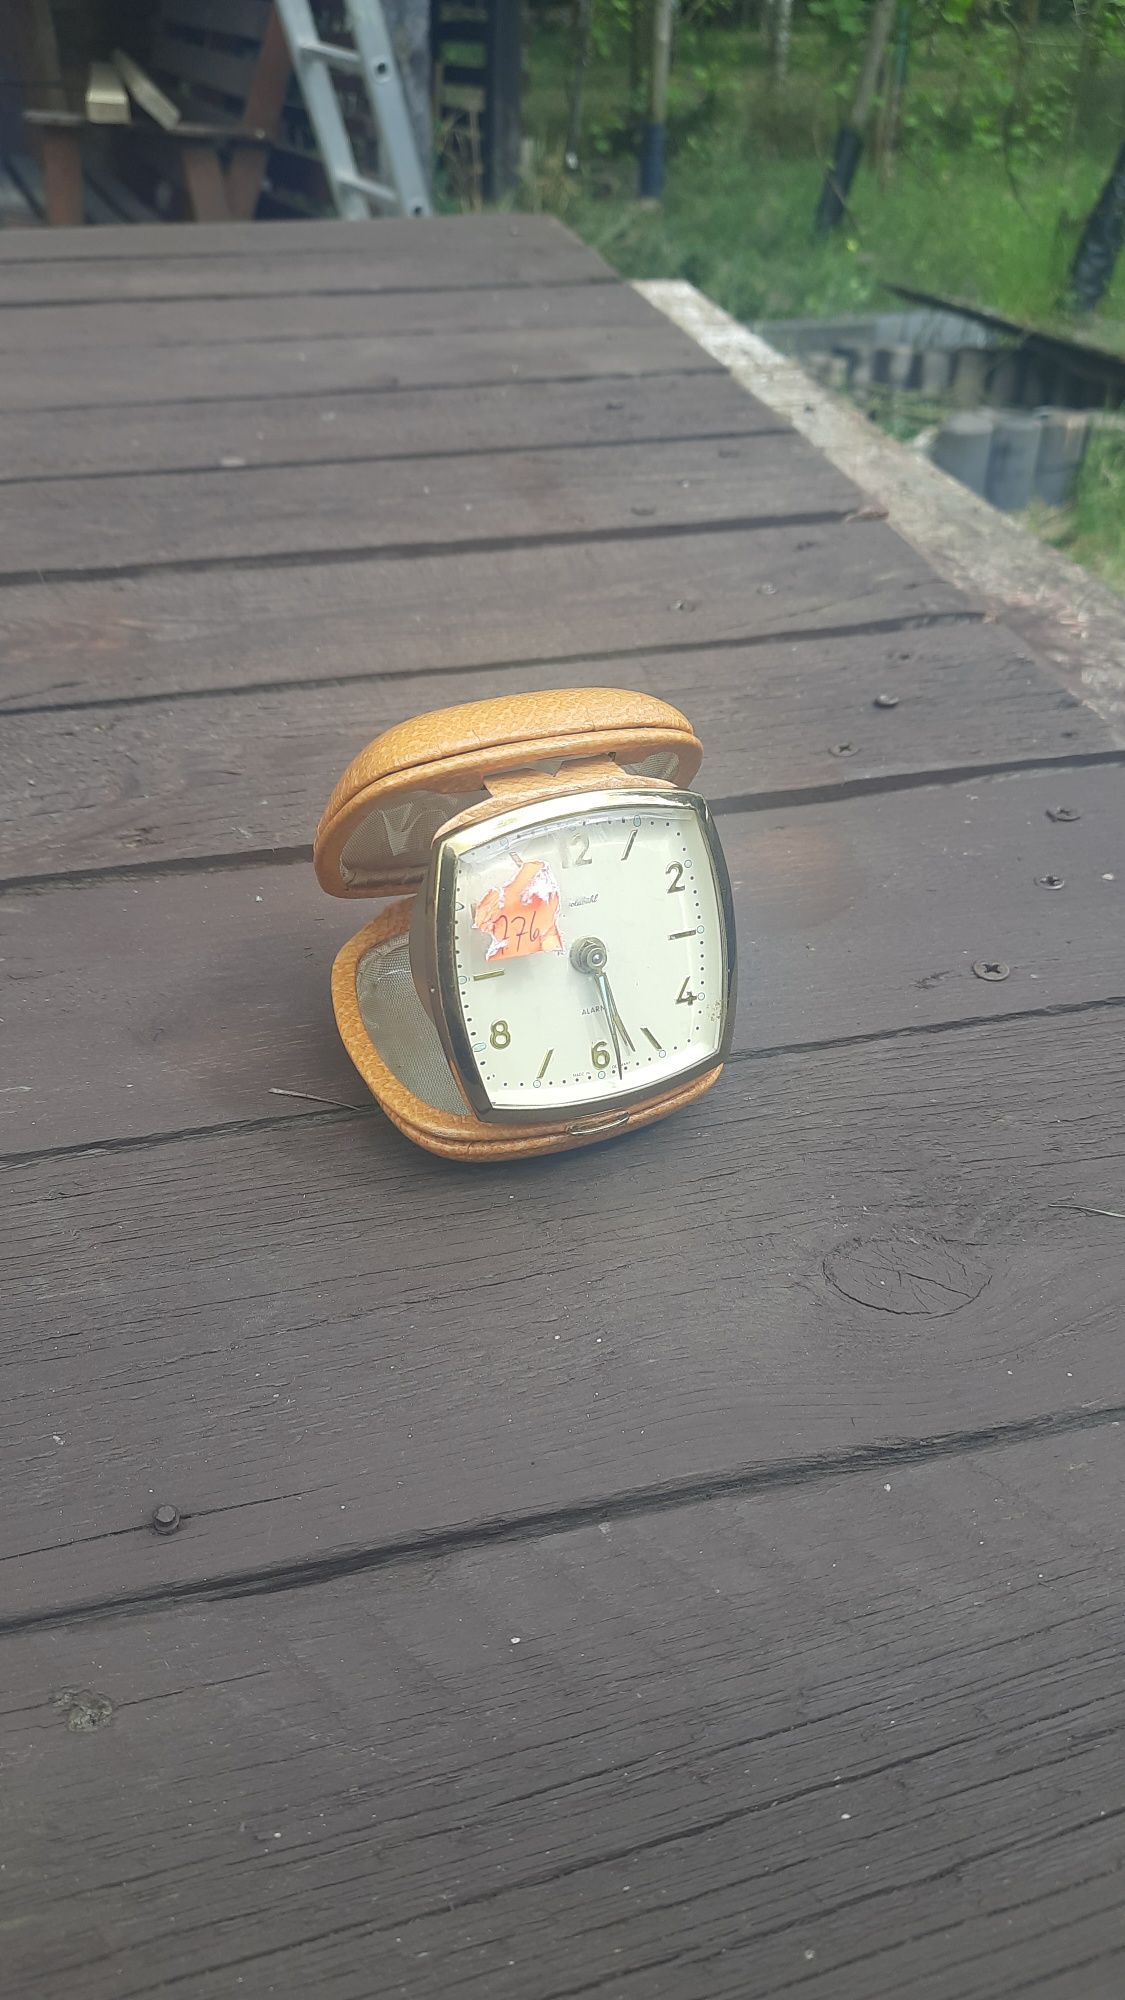 Zegarek budzik niemiecki